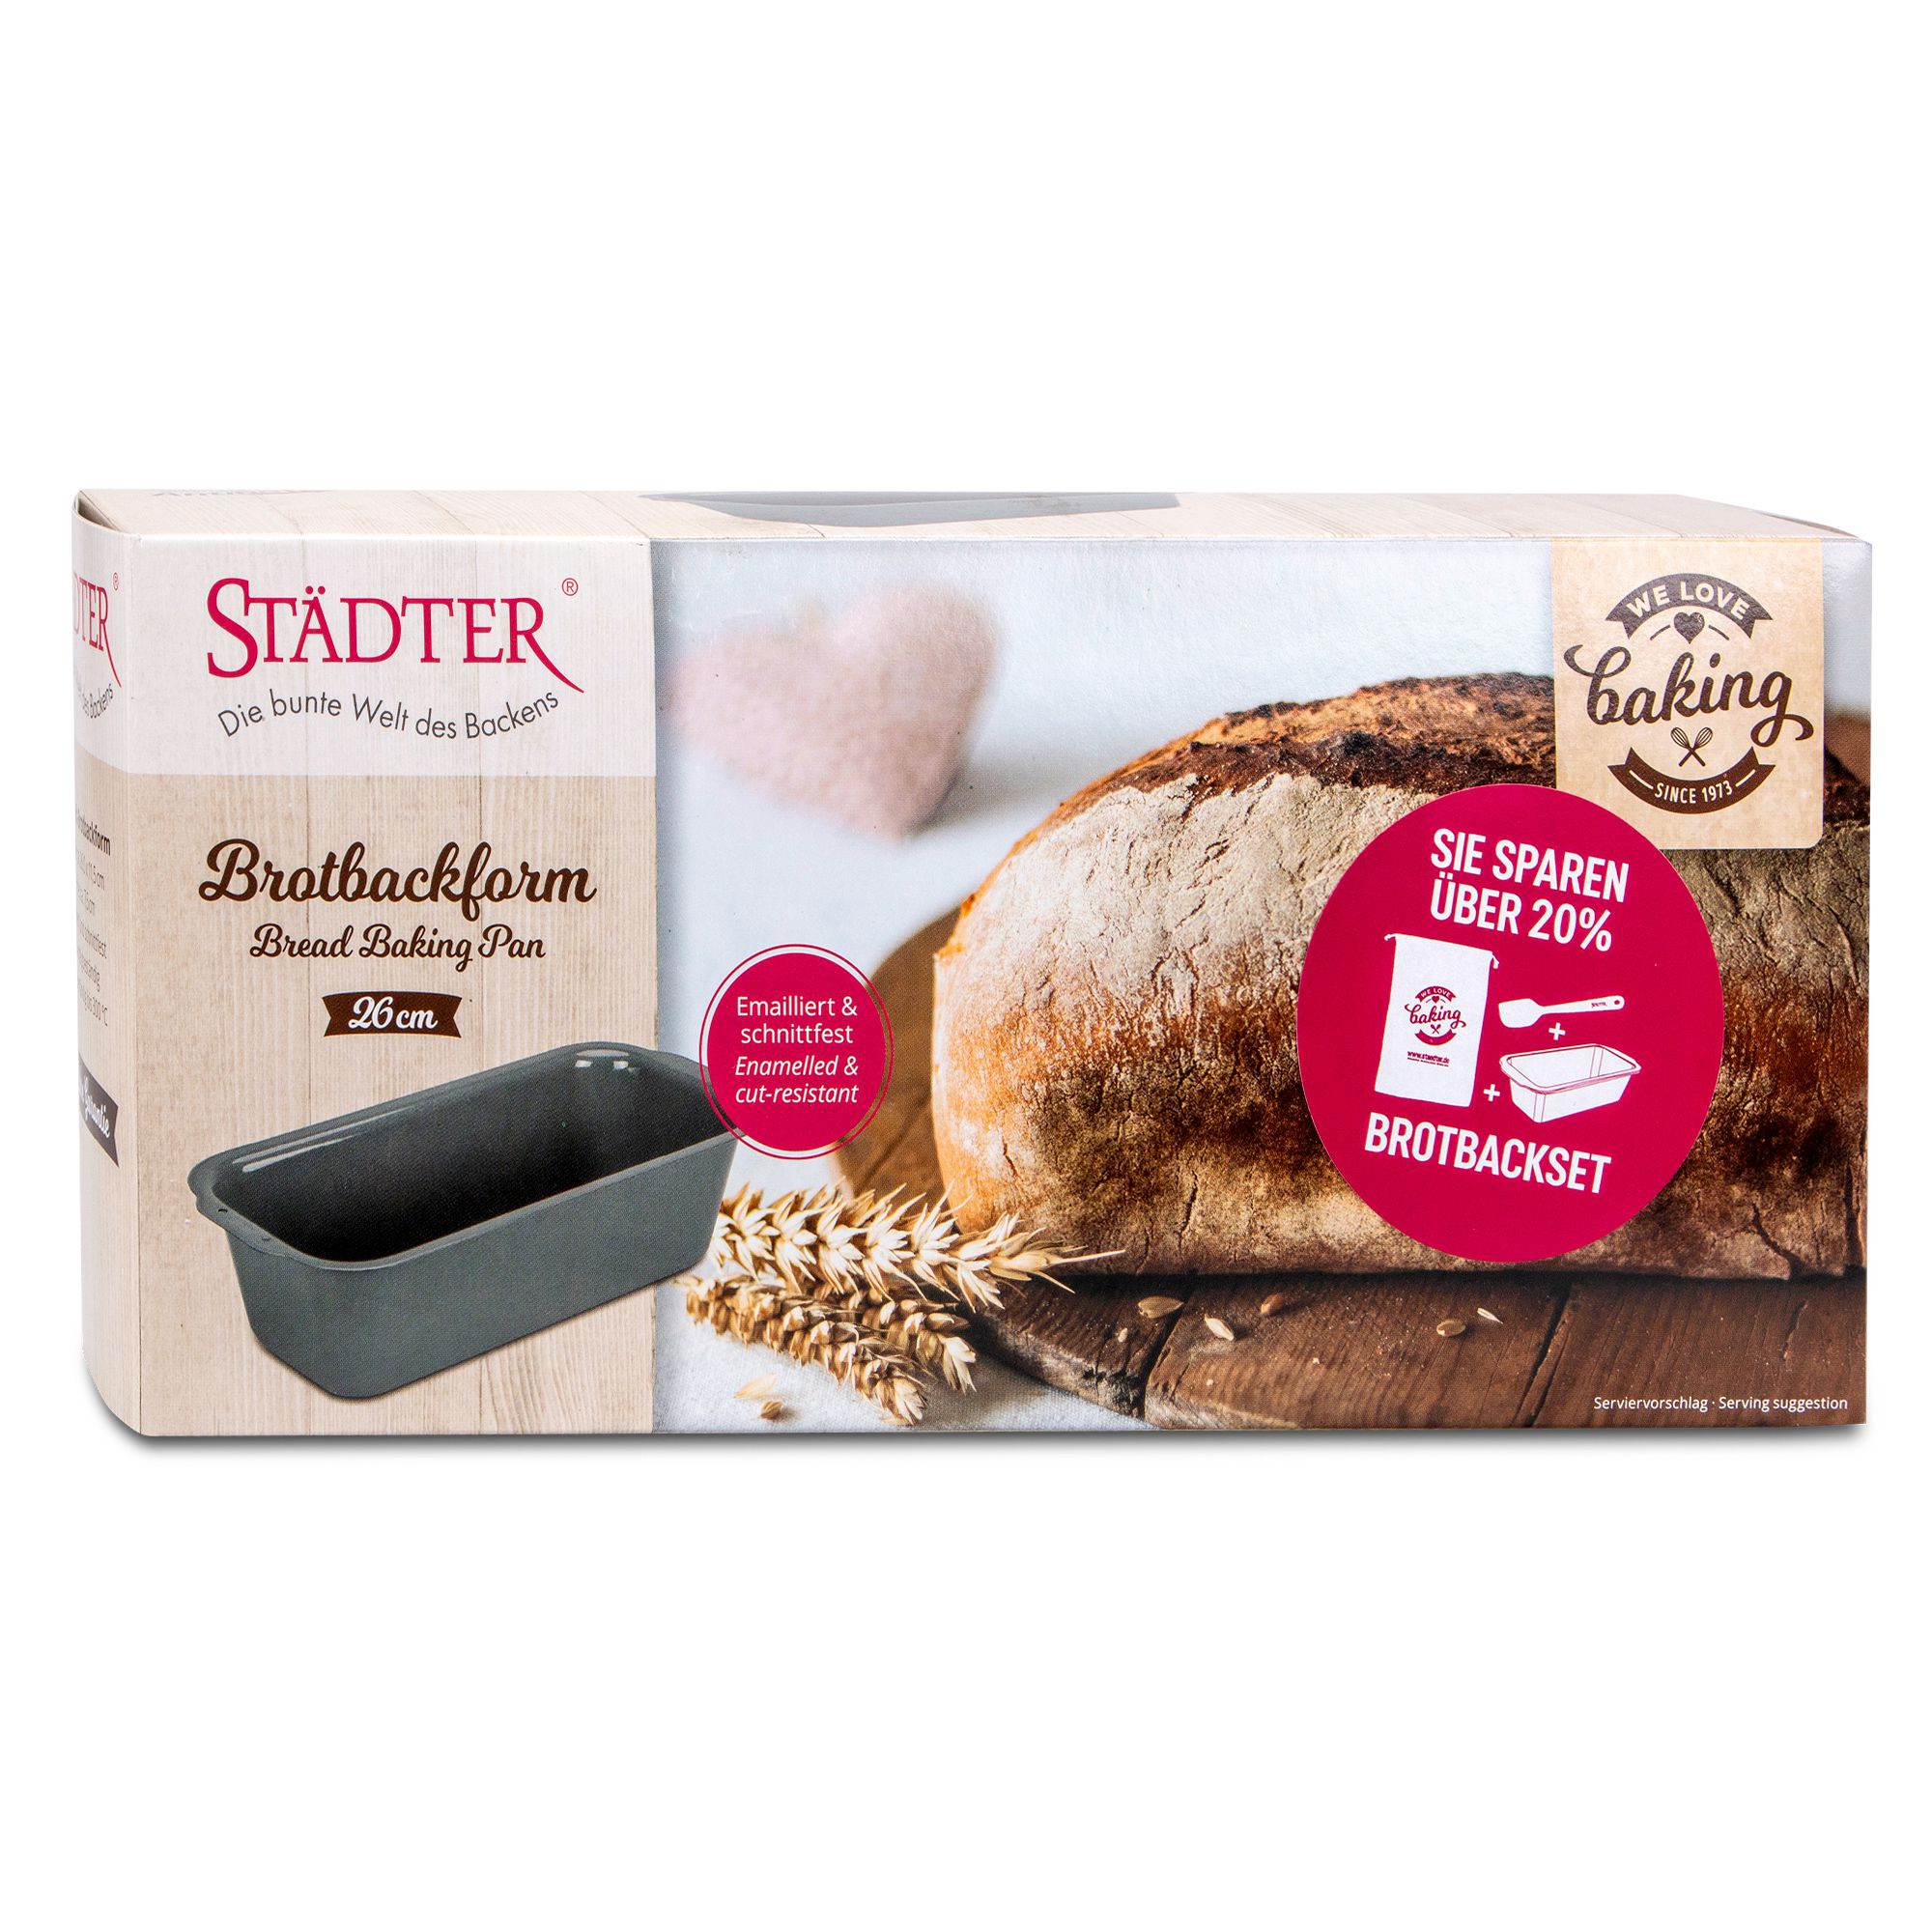 Städter - Bread baking set 26cm with dough scraper, 26 x 11.5 x 7.5 cm